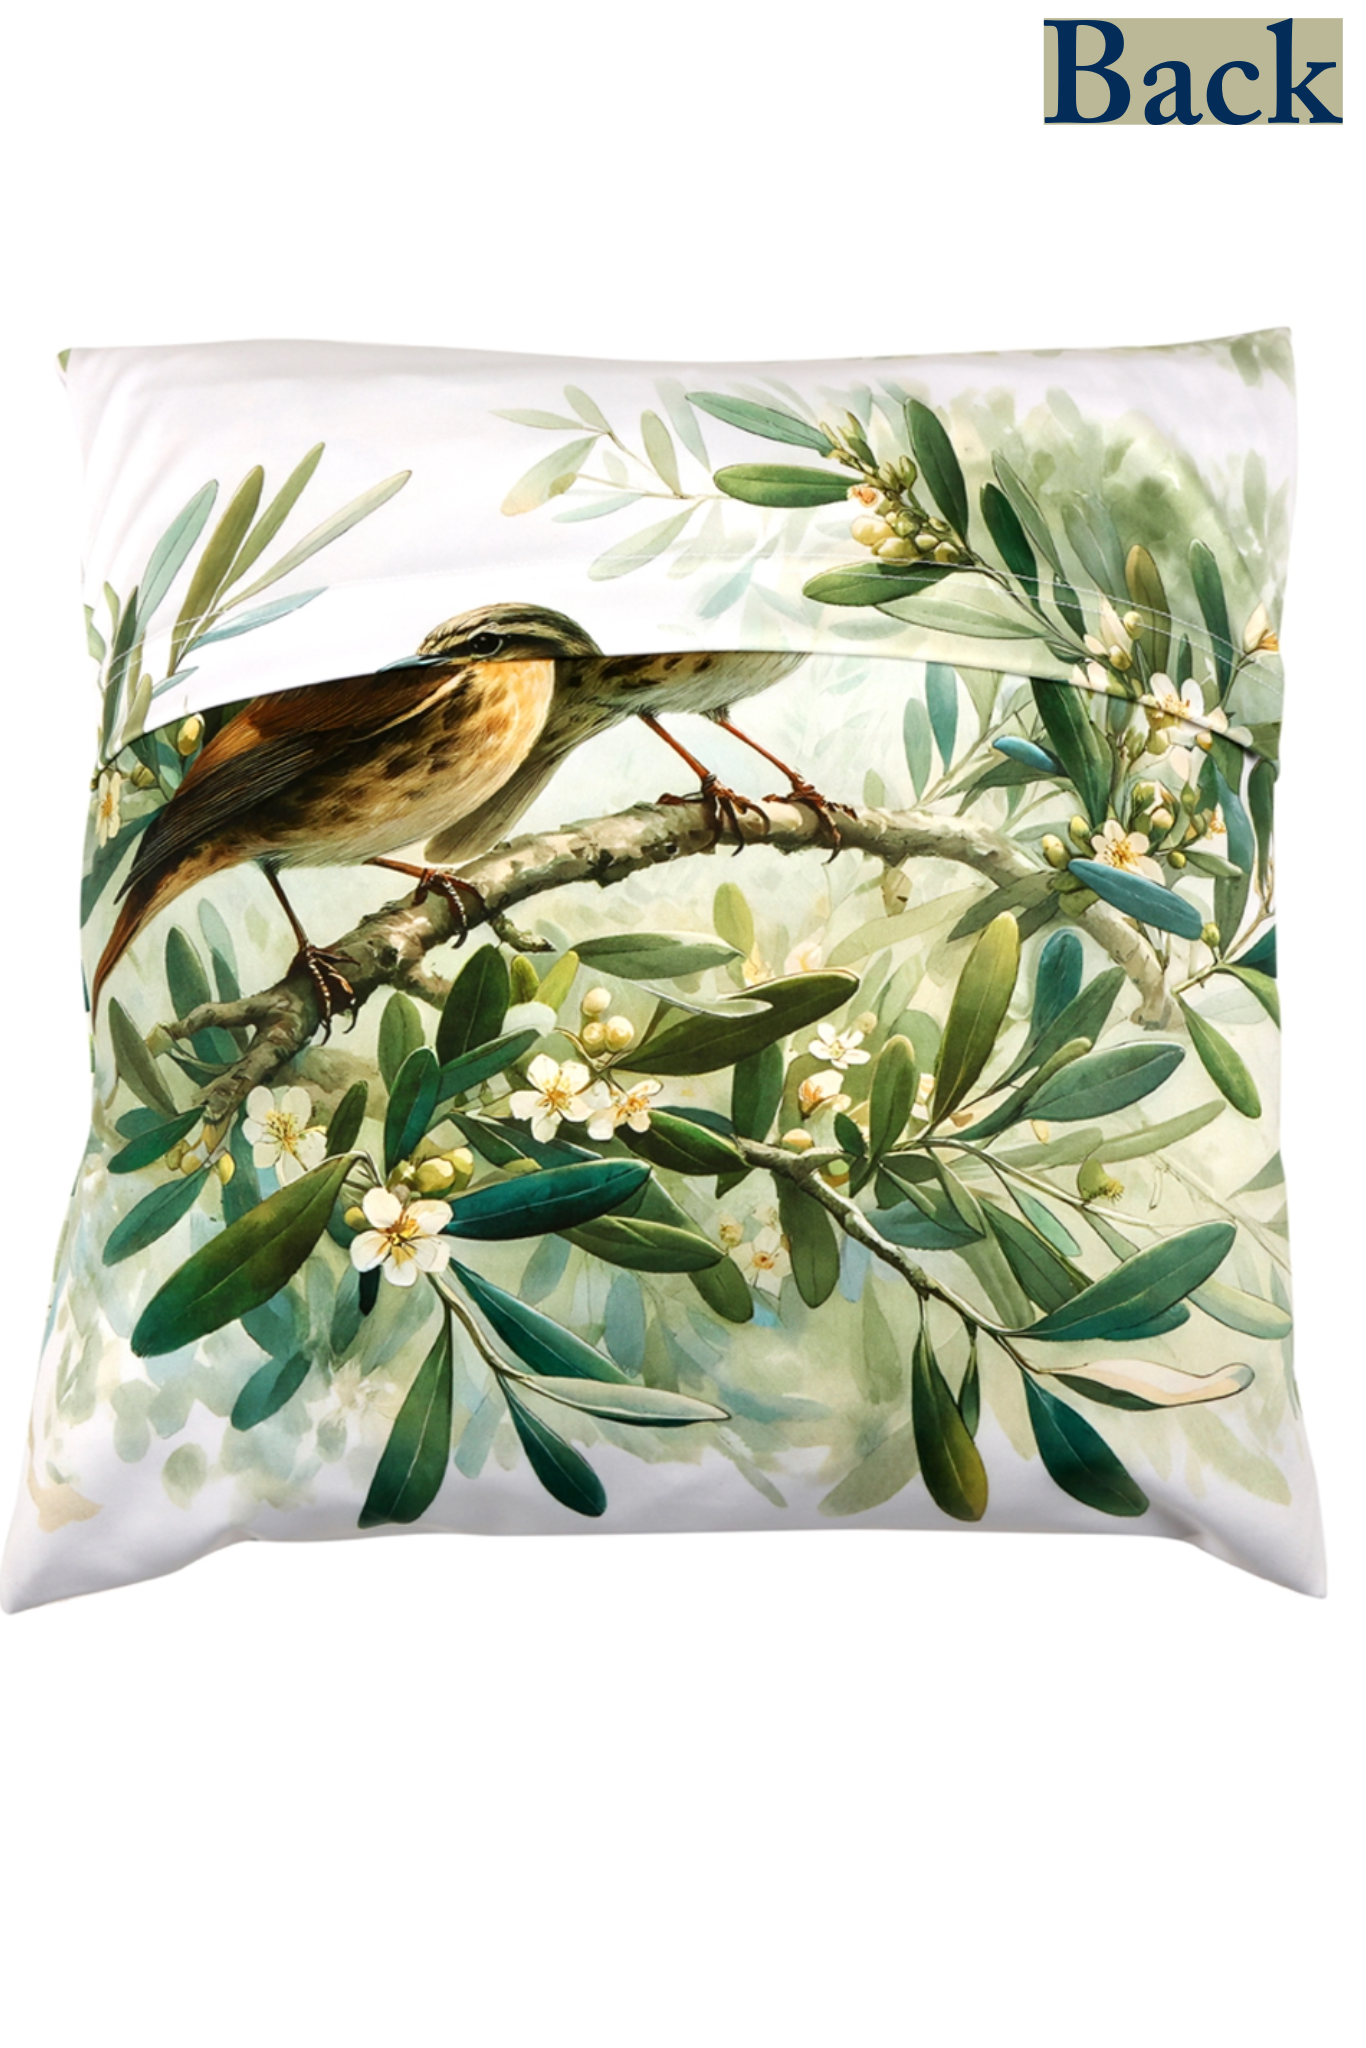 Perched Sparrows Cushion Cover - Printed - Ayuda Homes